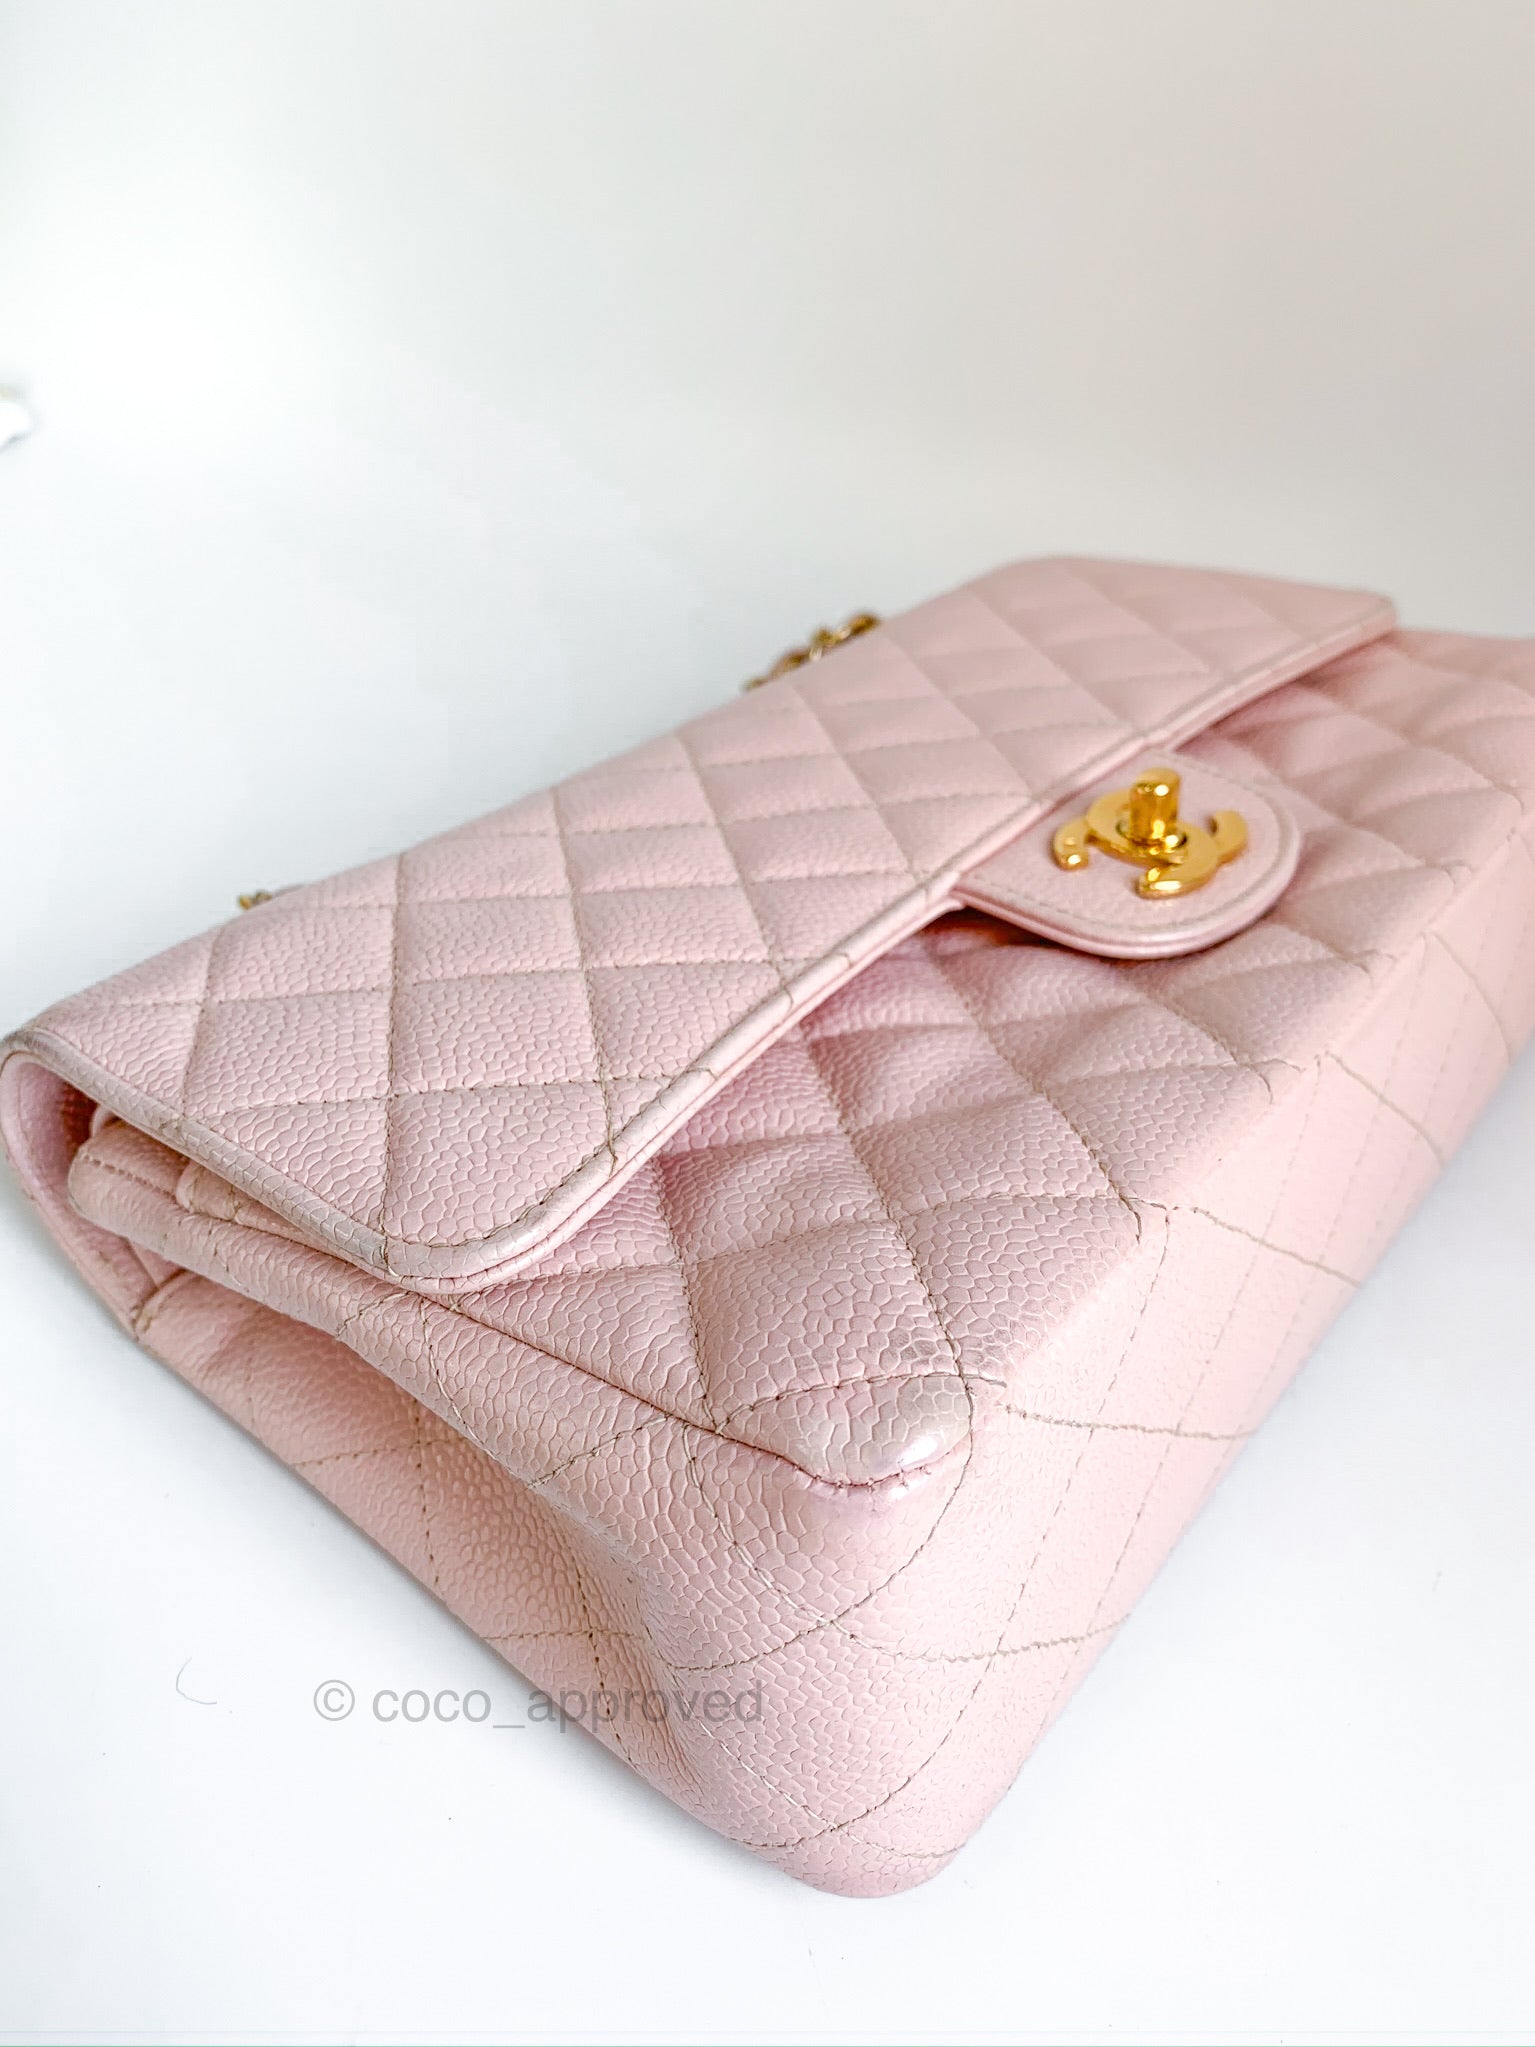 Chanel 2006 Vintage Pink Caviar Medium Classic Double Flap Bag SHW